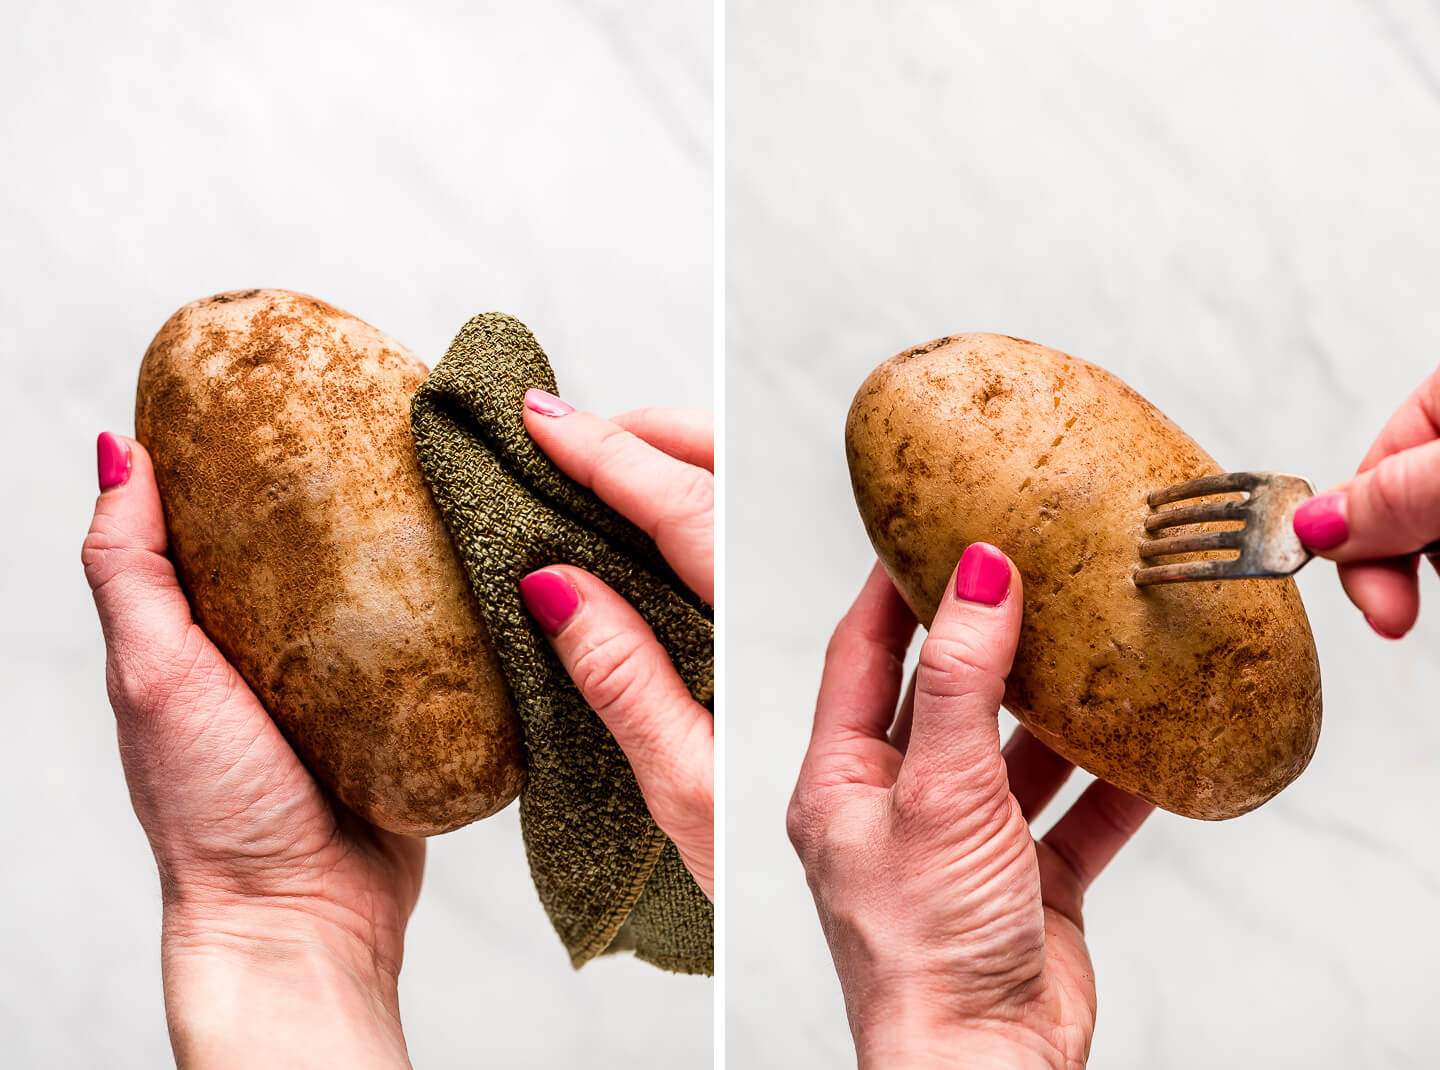 Diptych- scrubbing a potato; poking a potato with a fork.